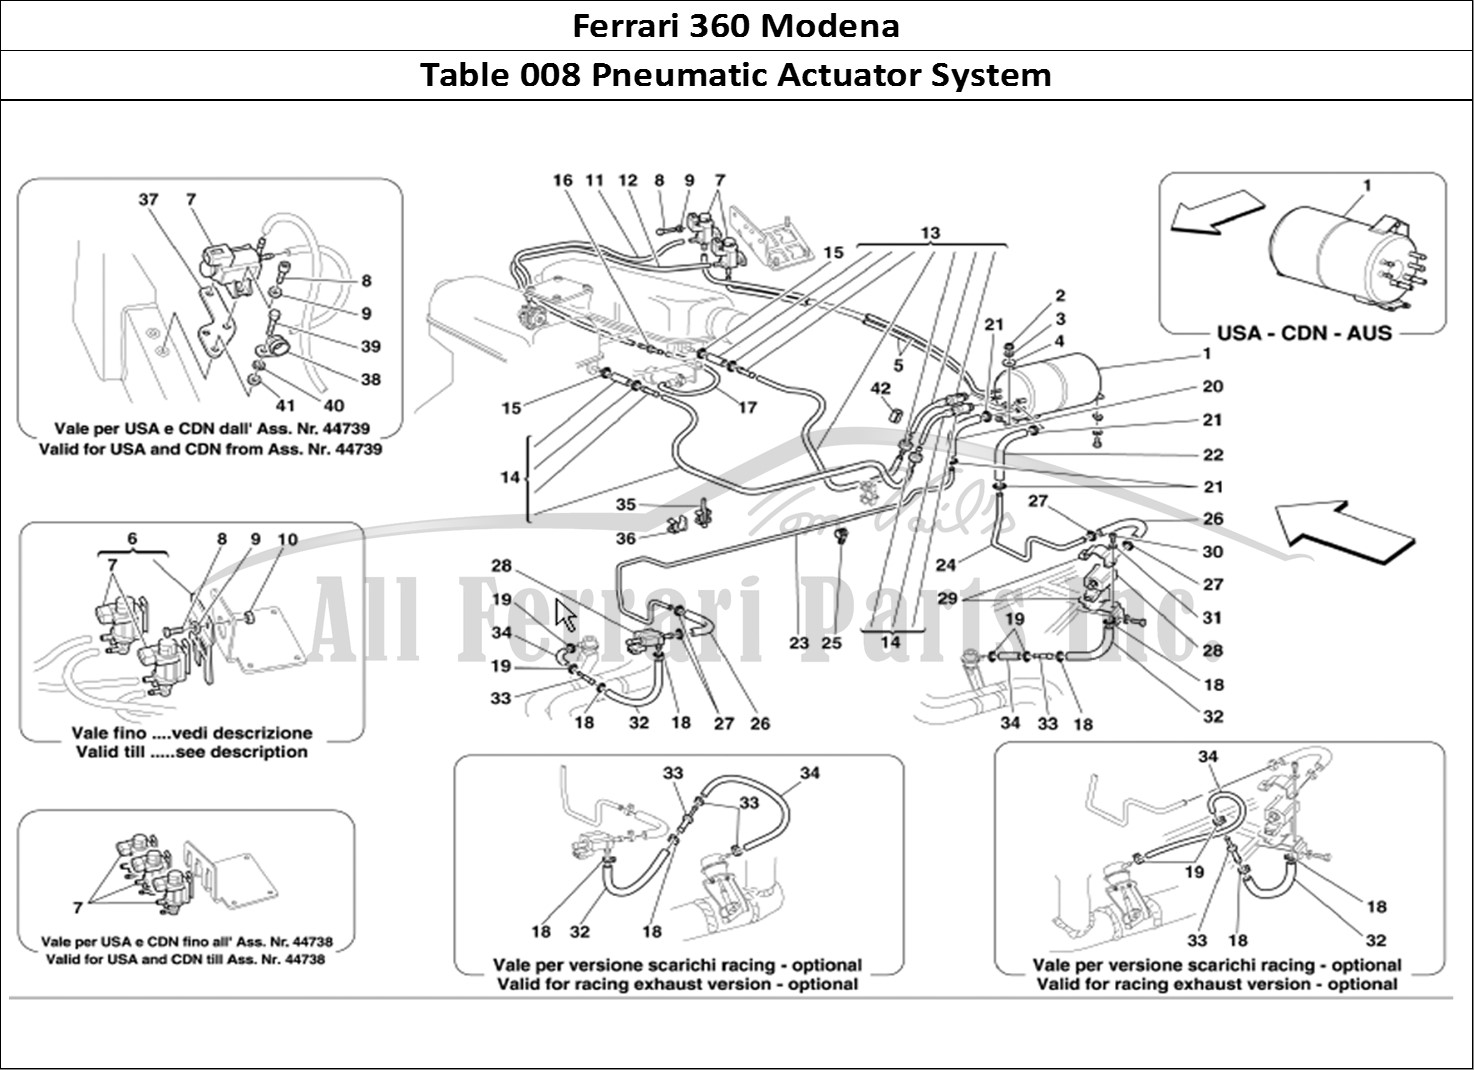 Ferrari Parts Ferrari 360 Modena Page 008 Pneumatics Actuator Syste